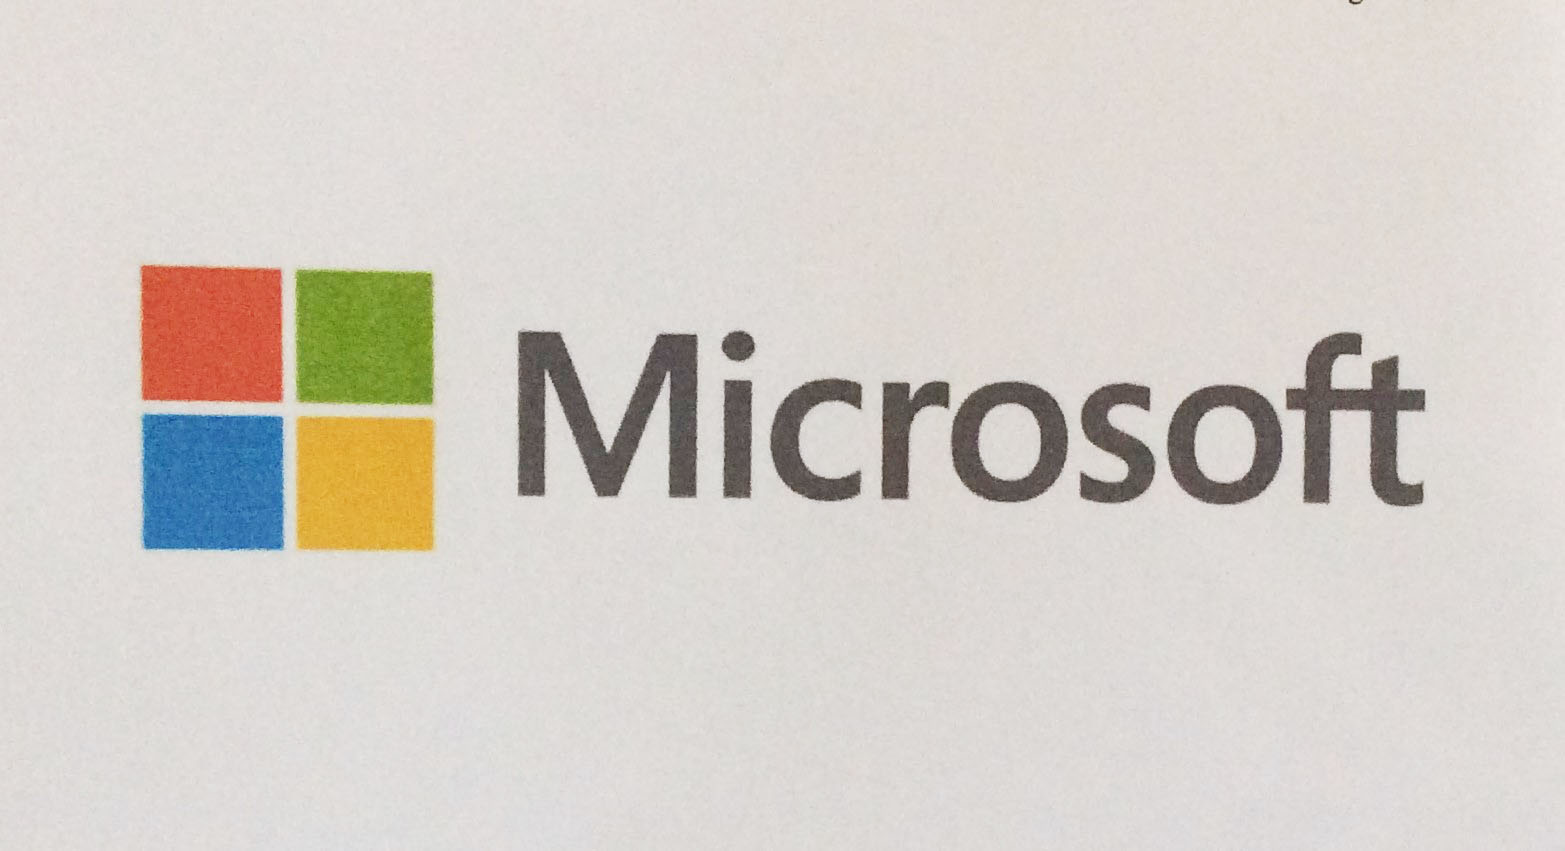 'Microsoft' - The Chosen Company